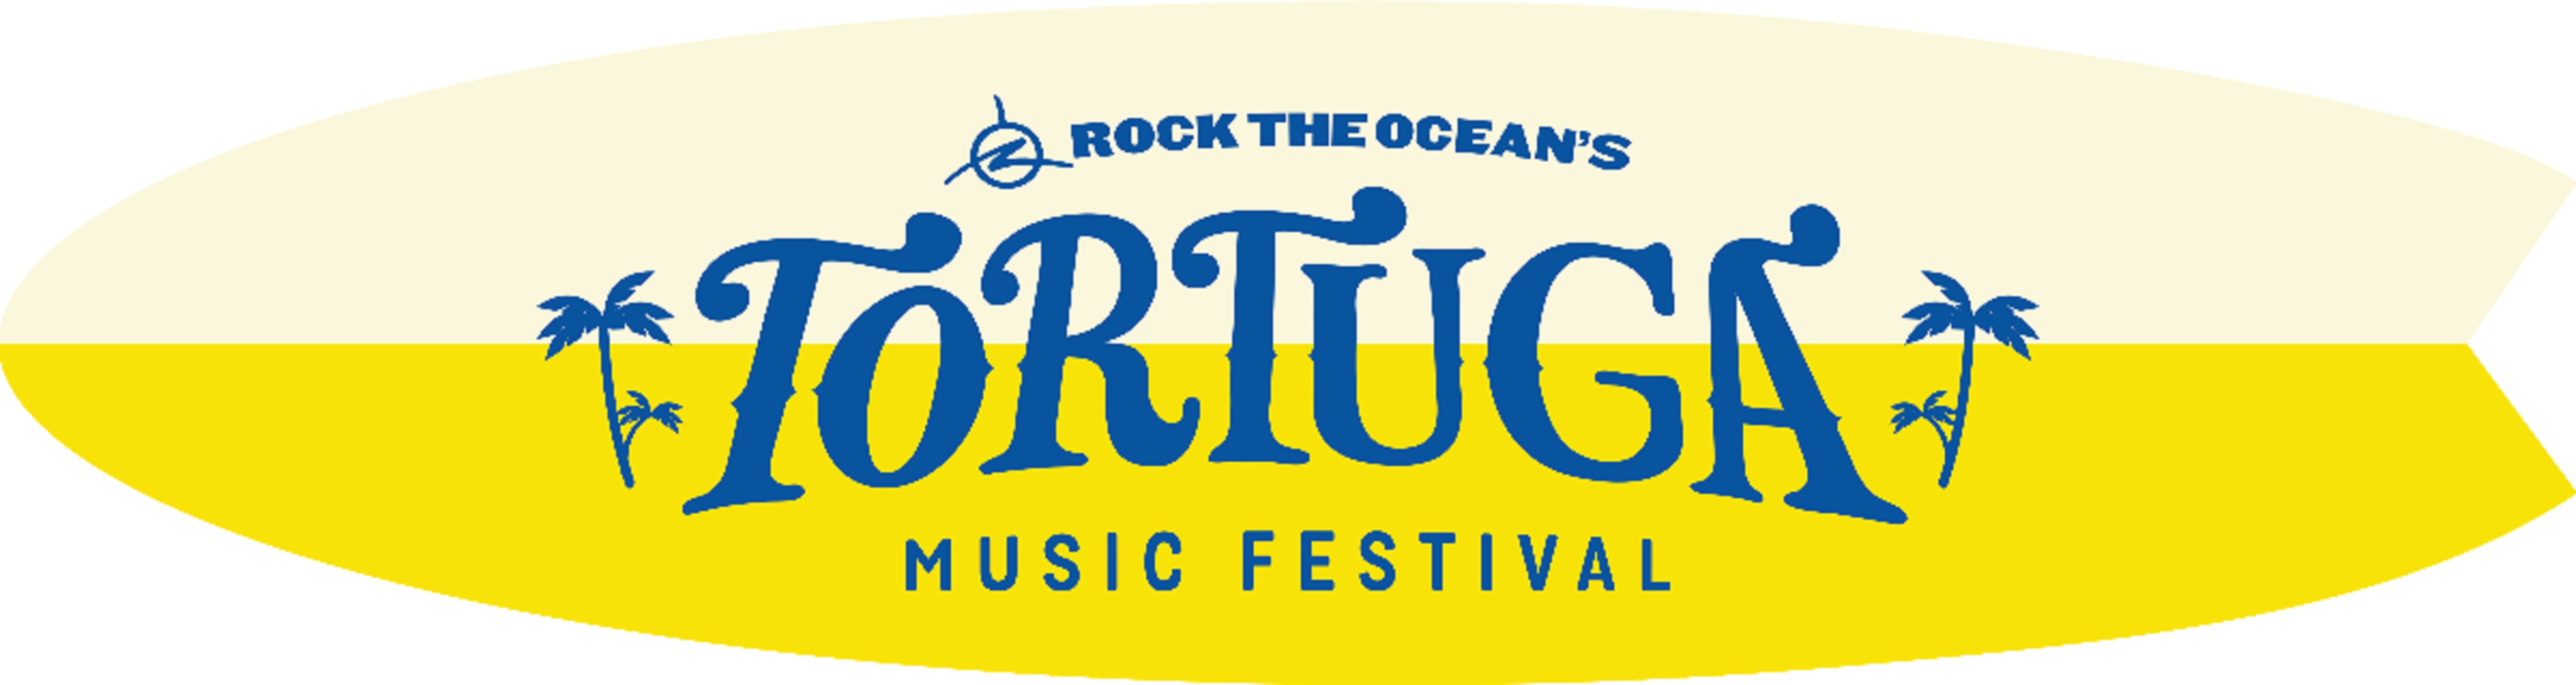 Tortuga Music Festival Announces 2022 Lineup